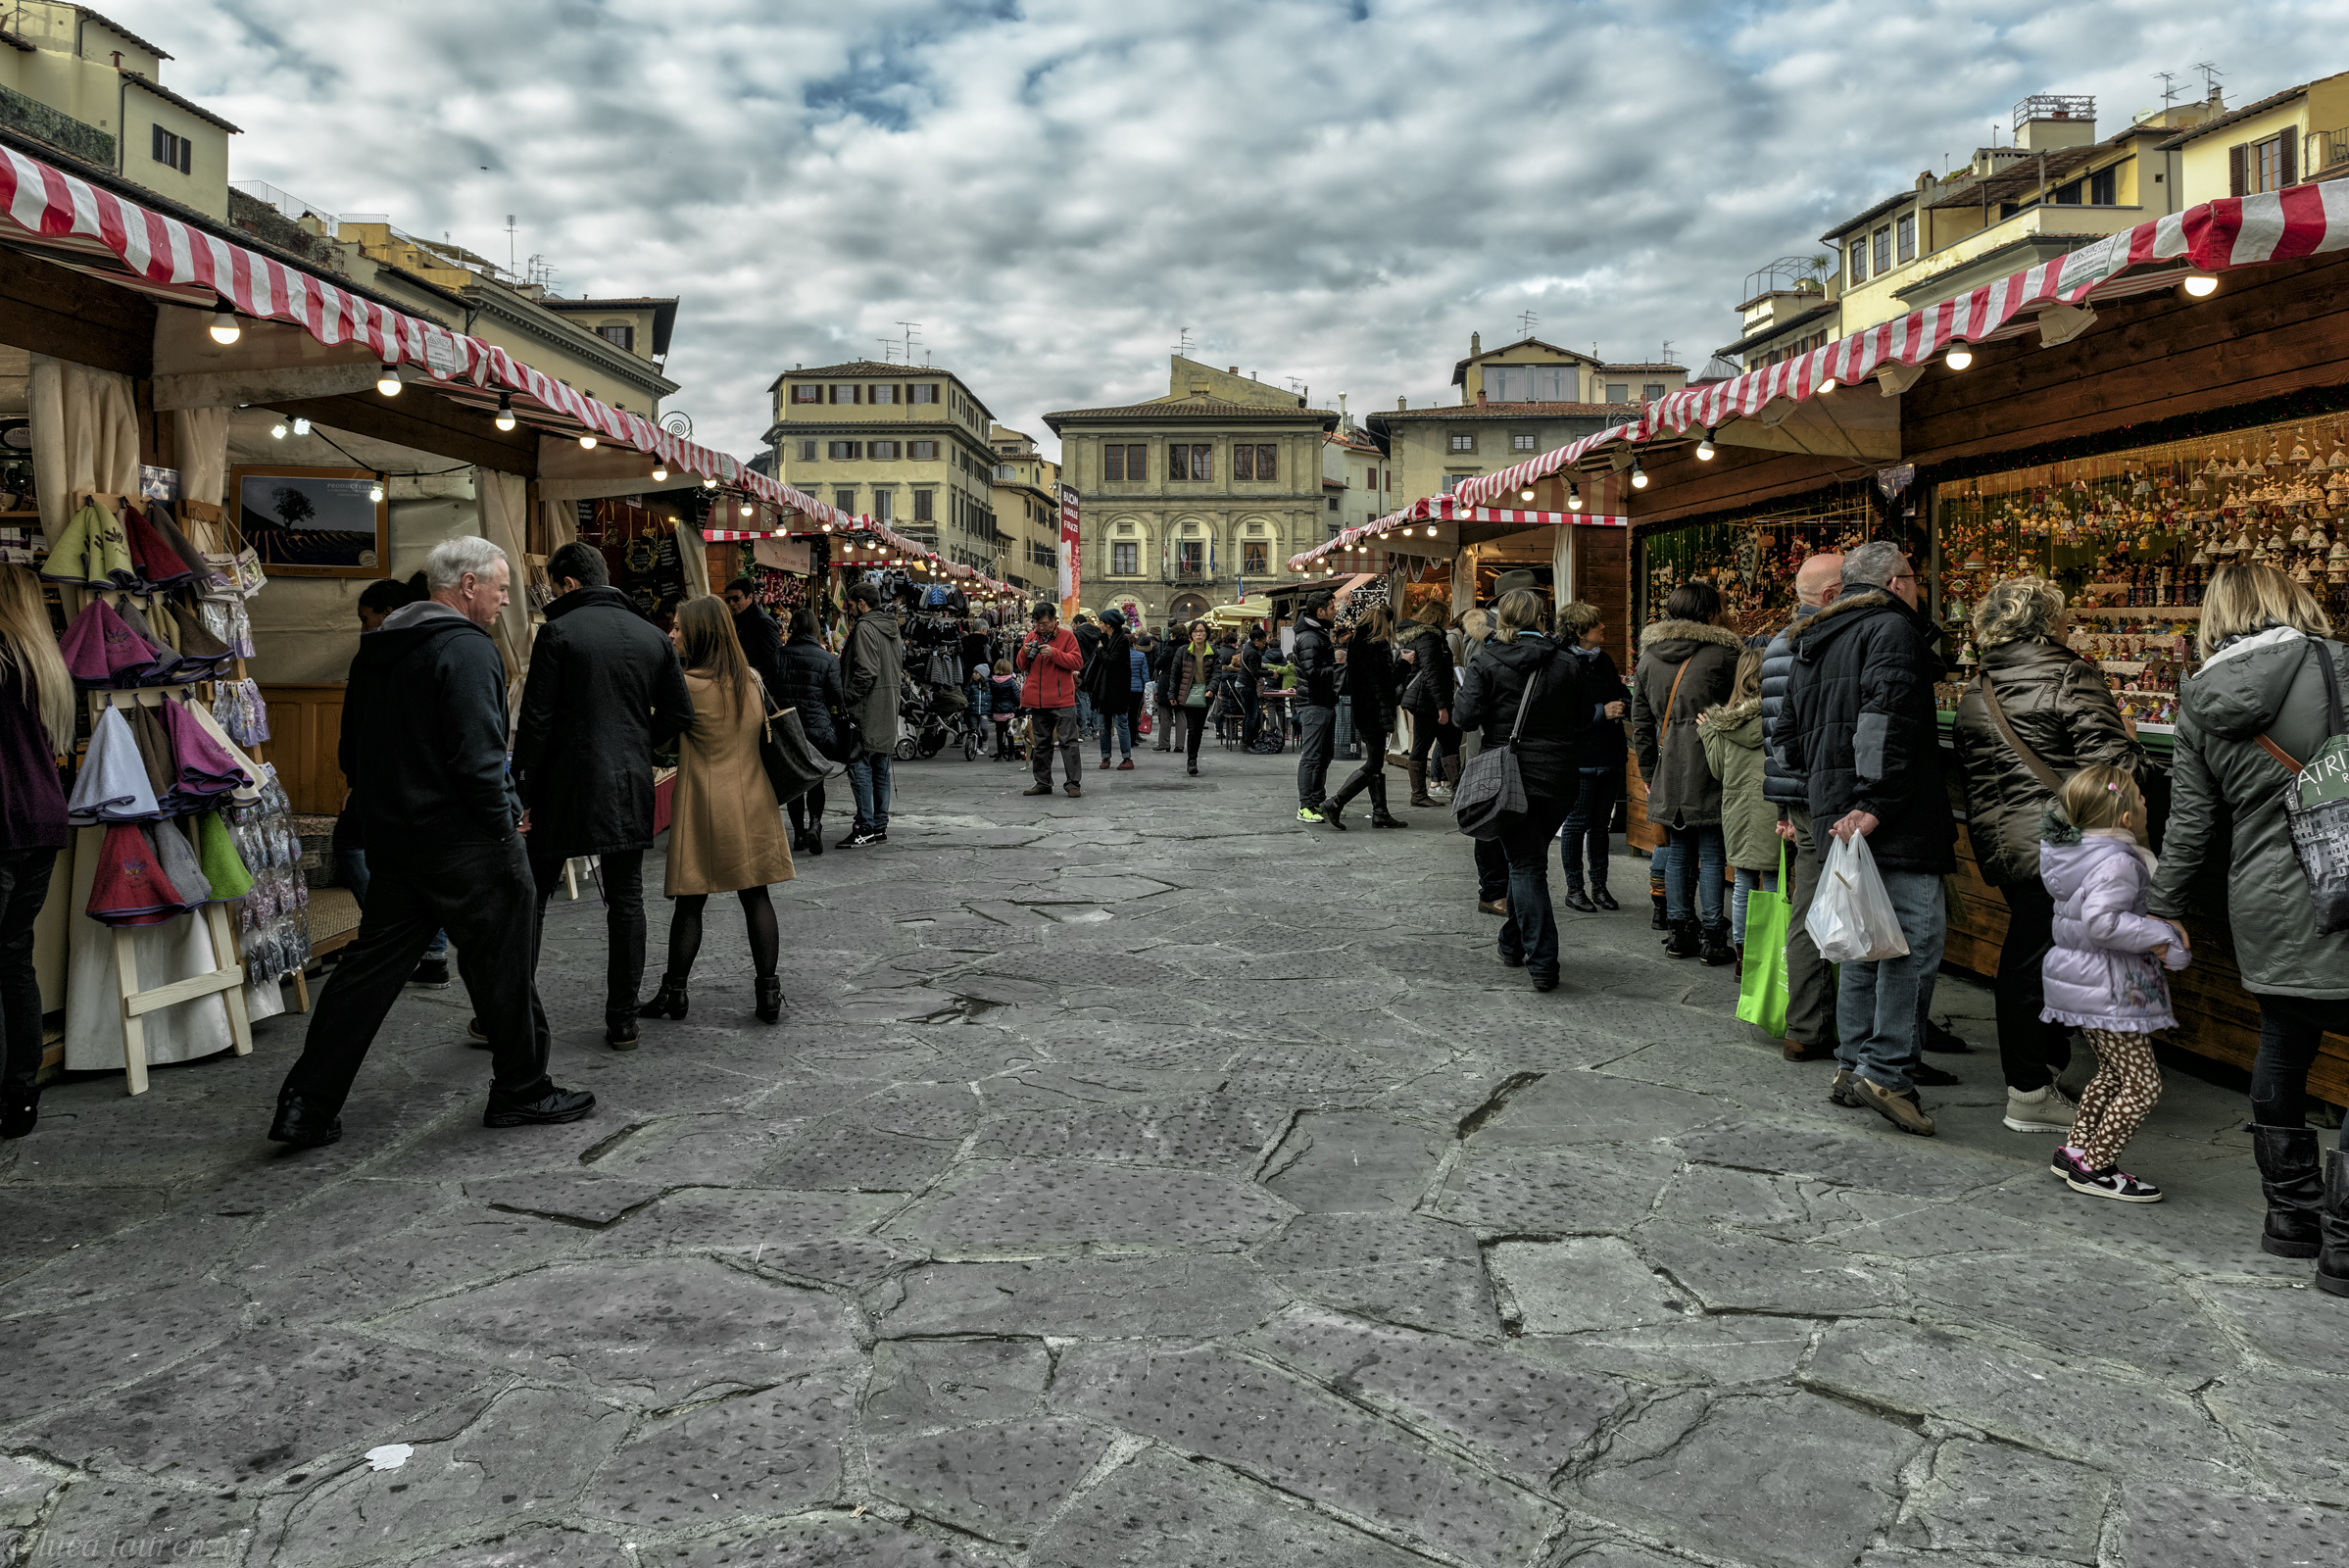 The market in Piazza Santa Croce...